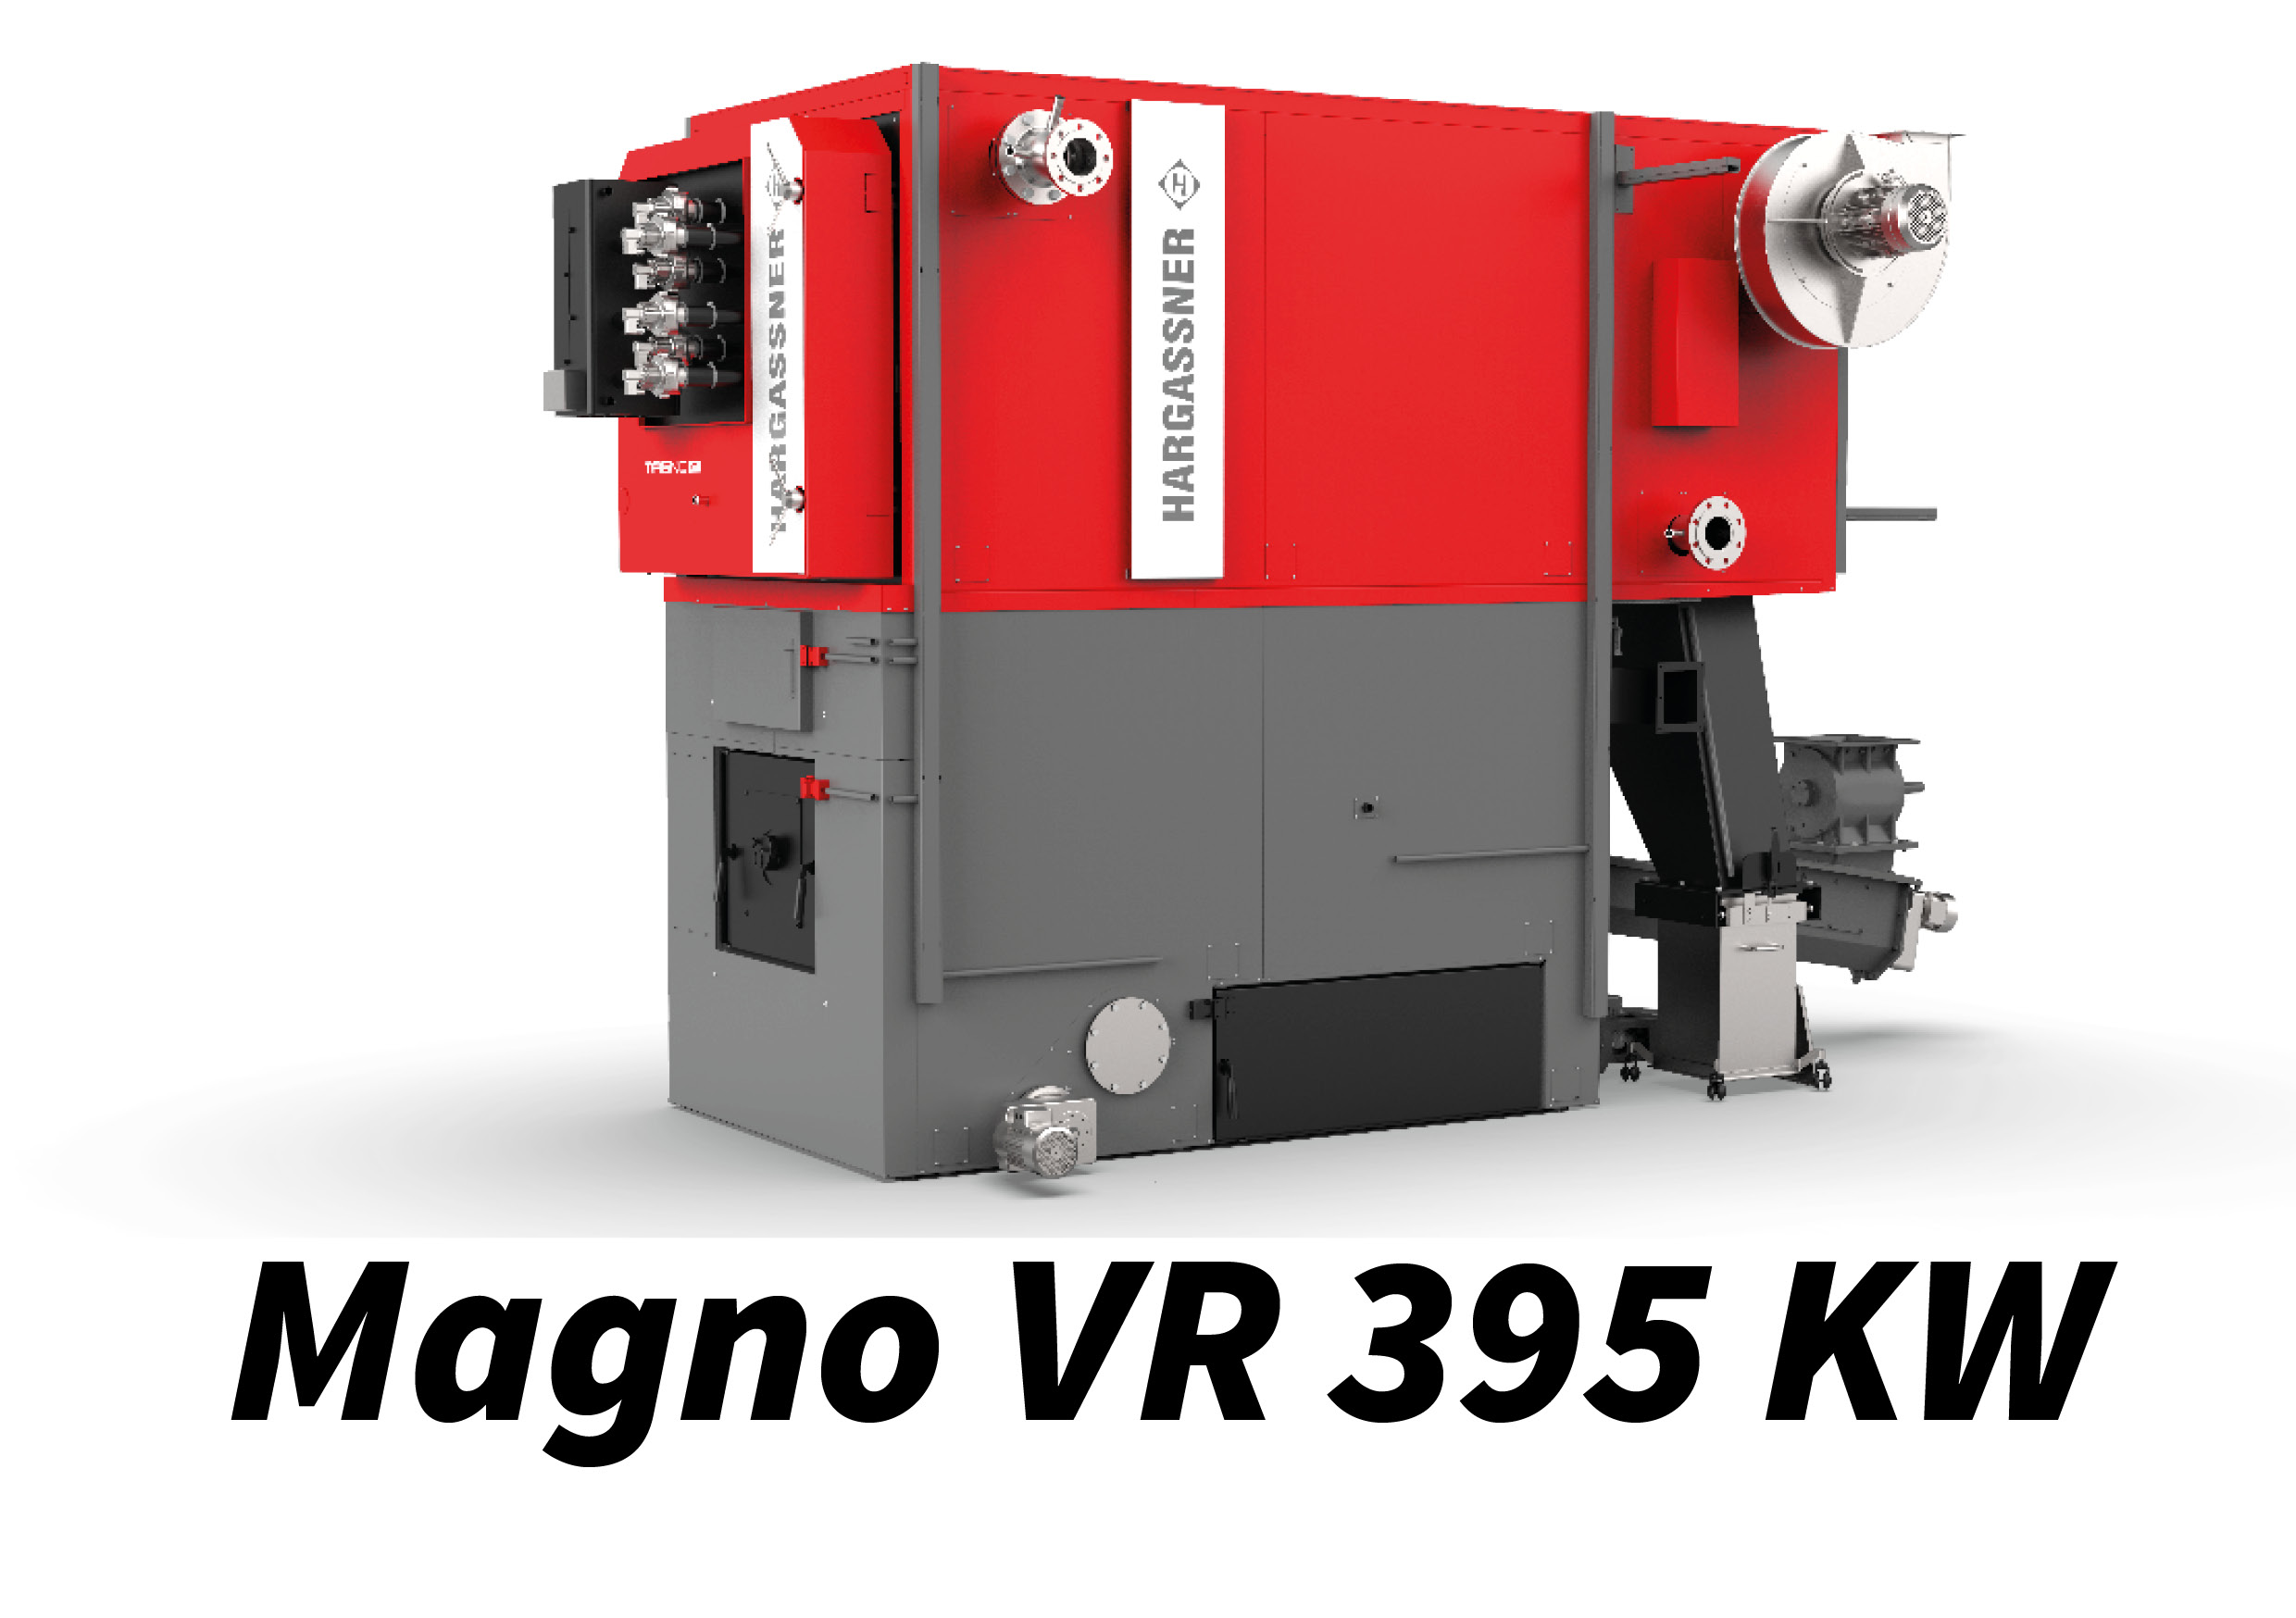 Magno VR 395 kW